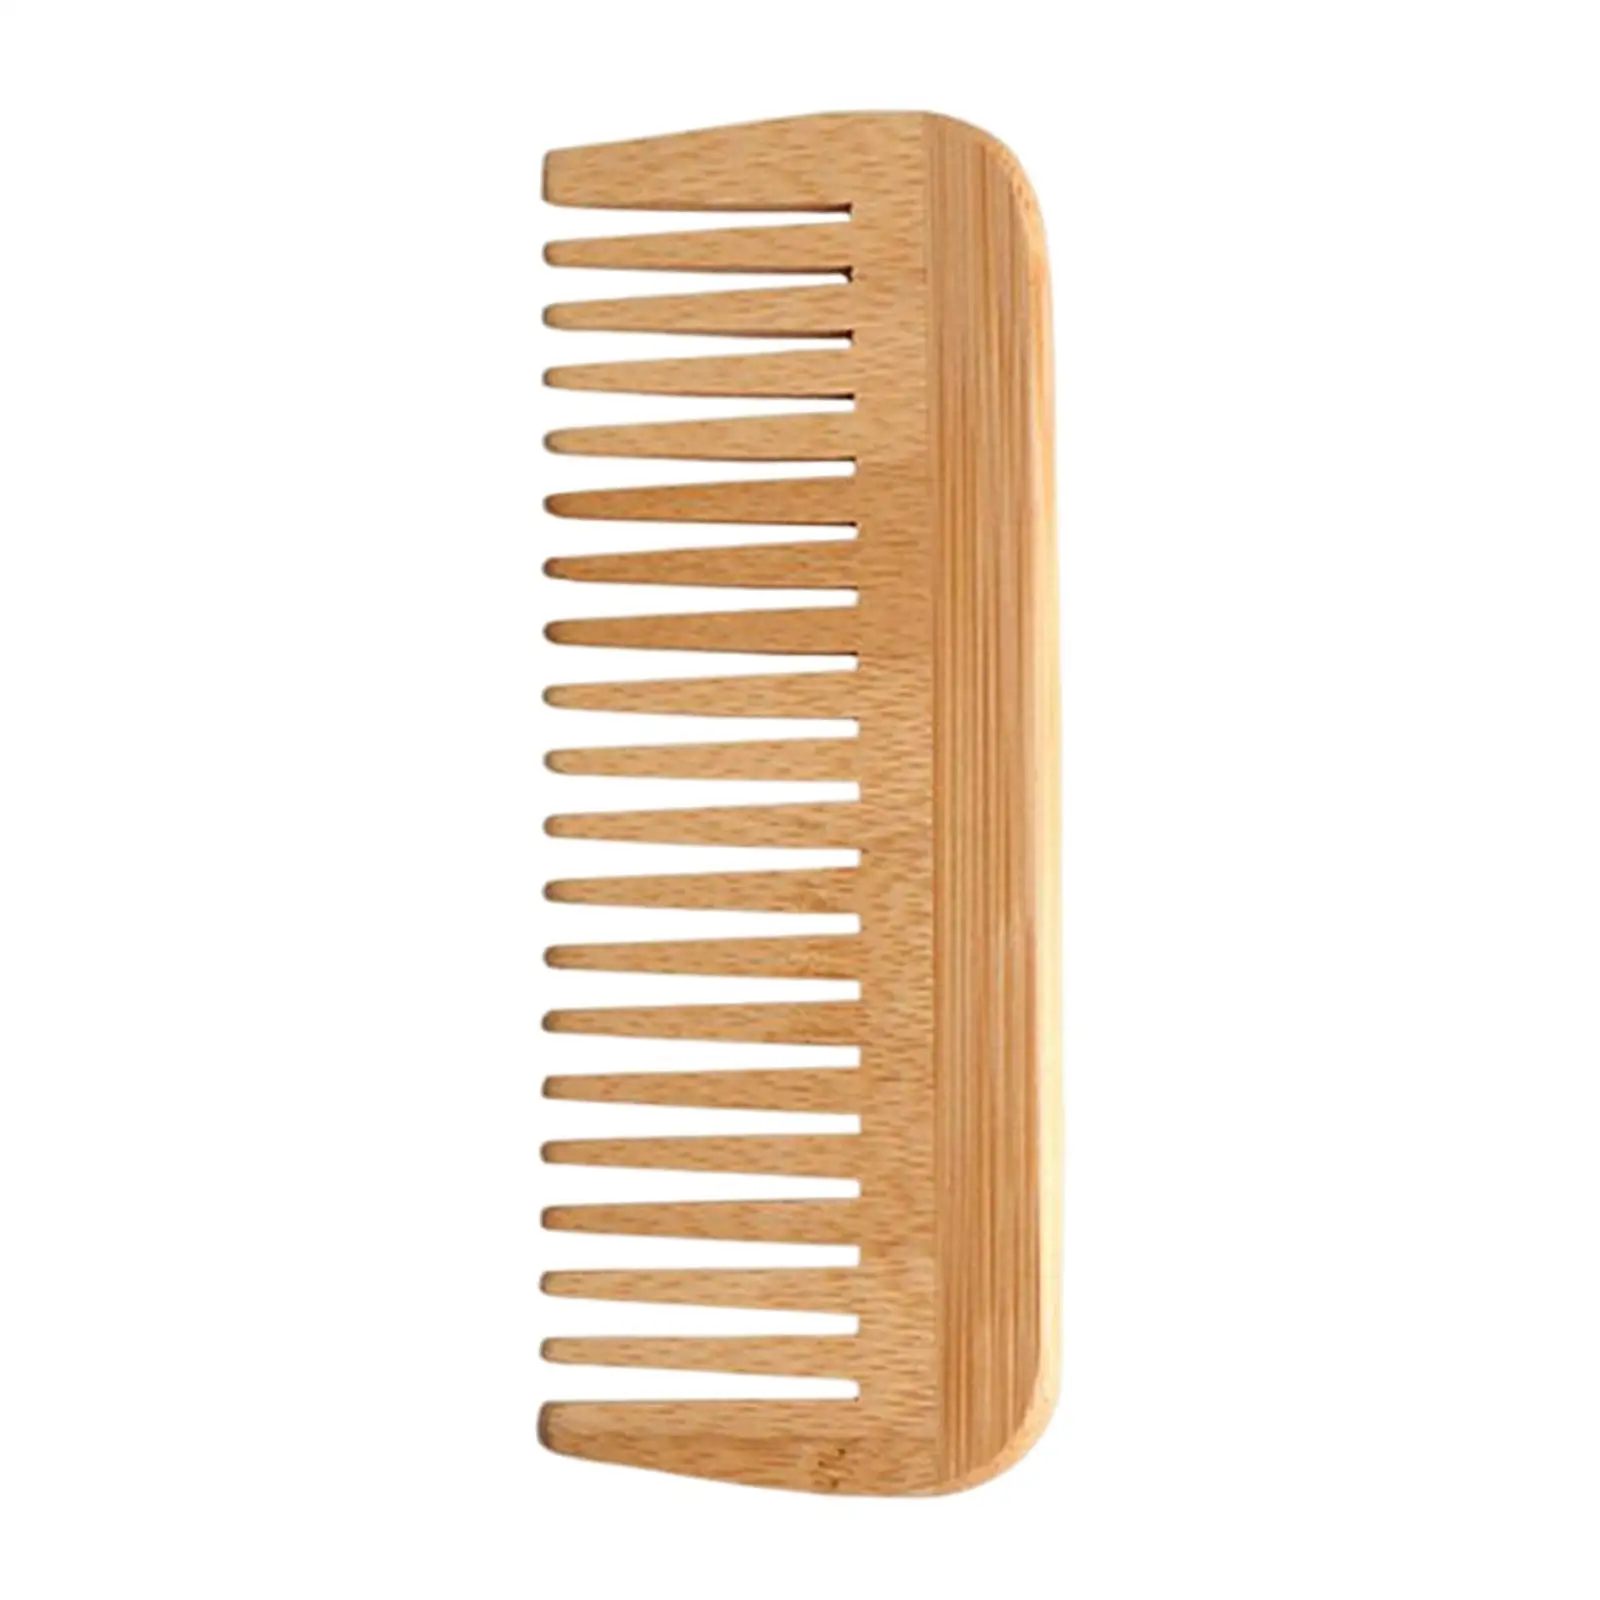 Bamboo Wooden Wide Tooth Hair Comb Hair Detangler Comb for Women Girls